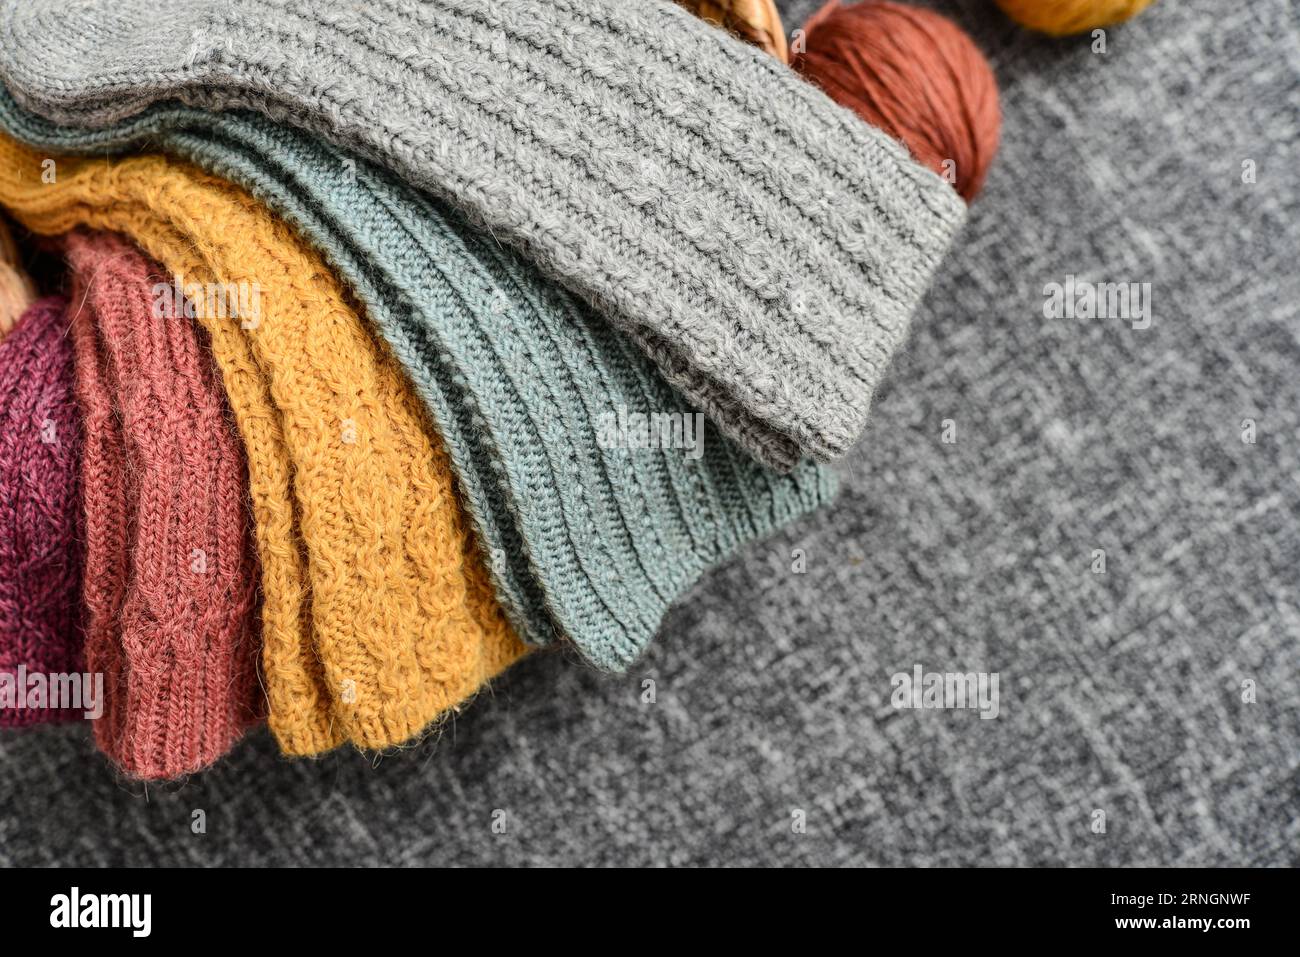 girl knits sock knitting needles on white background Stock Photo - Alamy